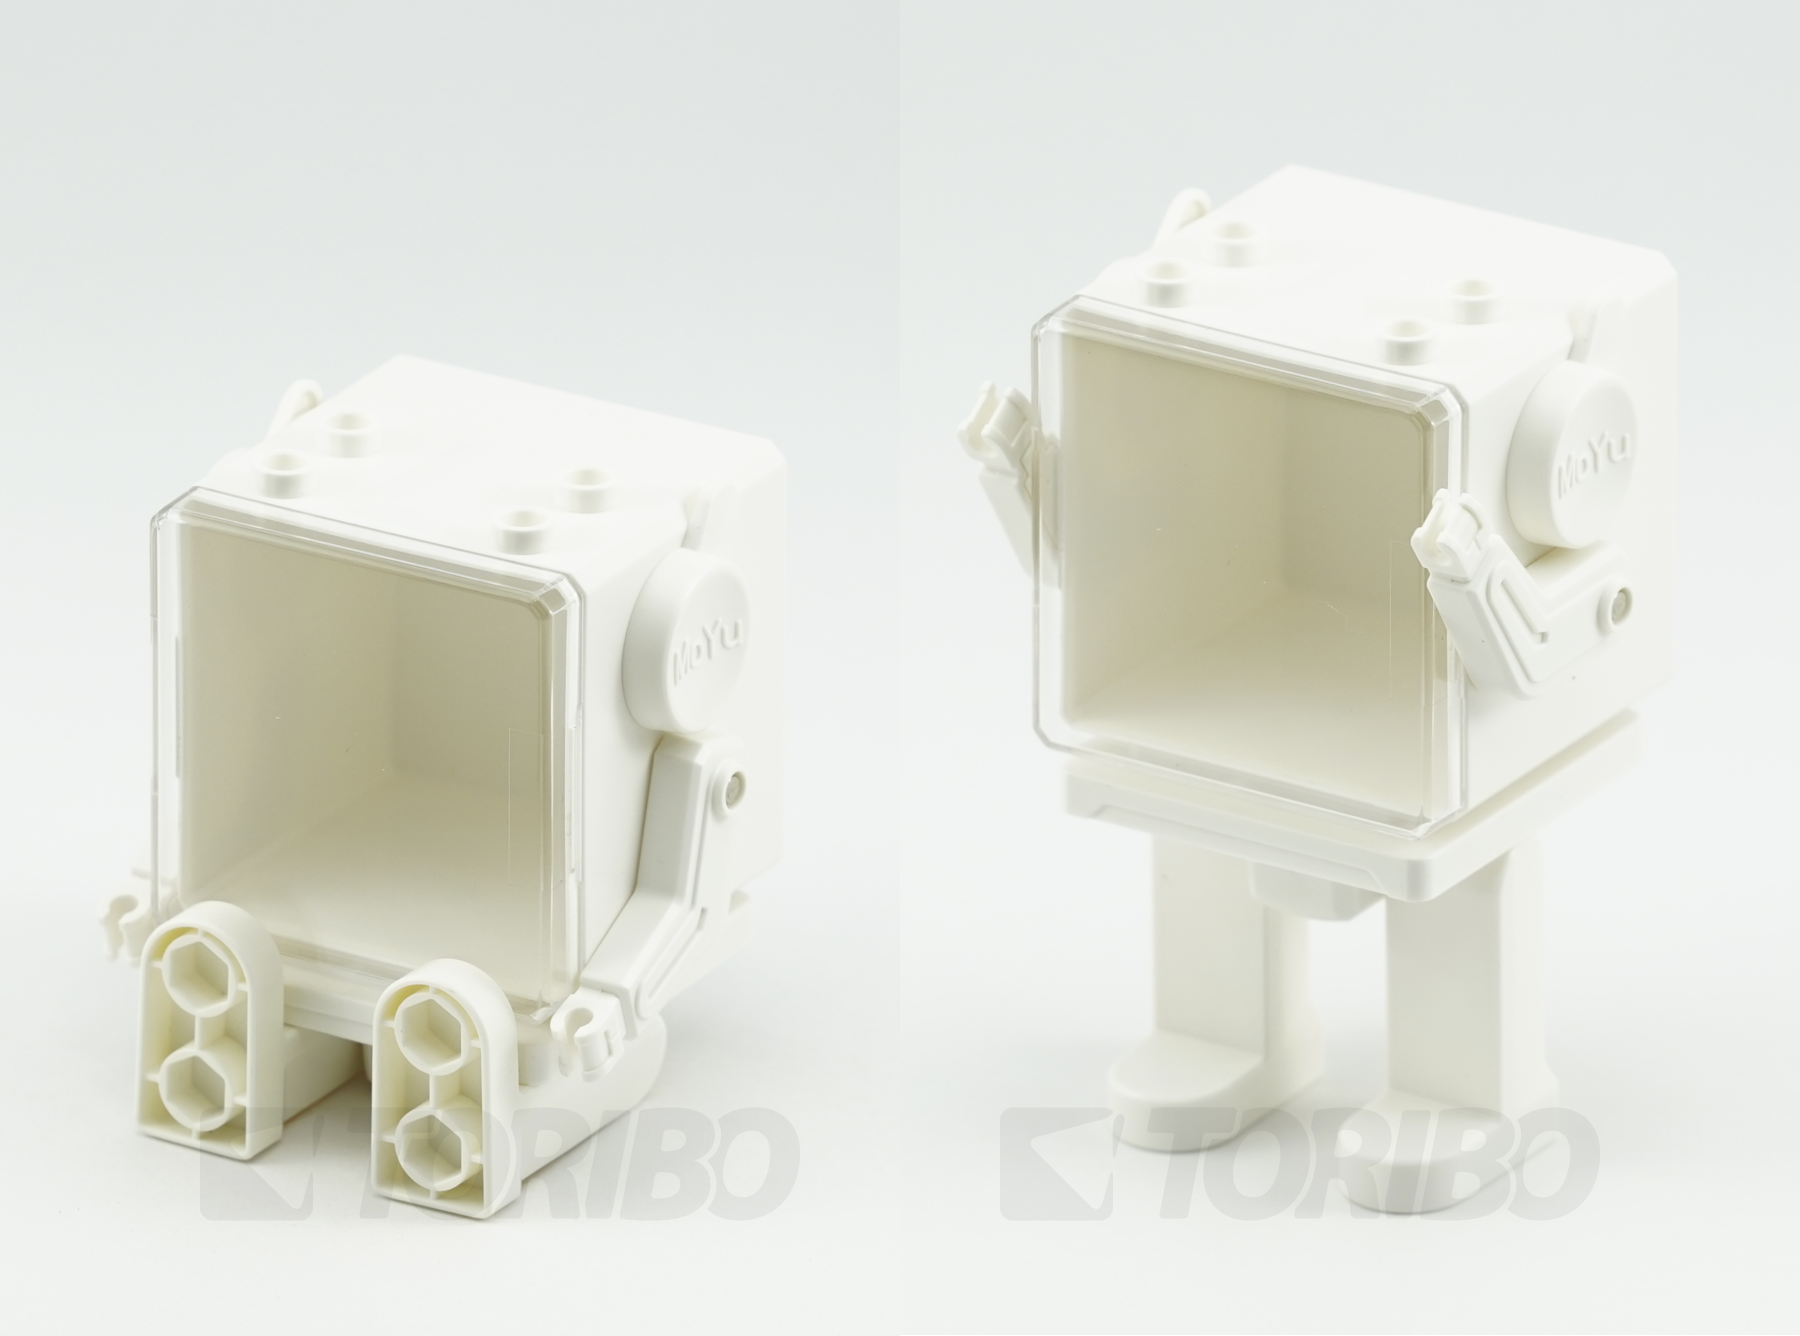 triboxストア / MoYu Cube Robot Case 56.5mm